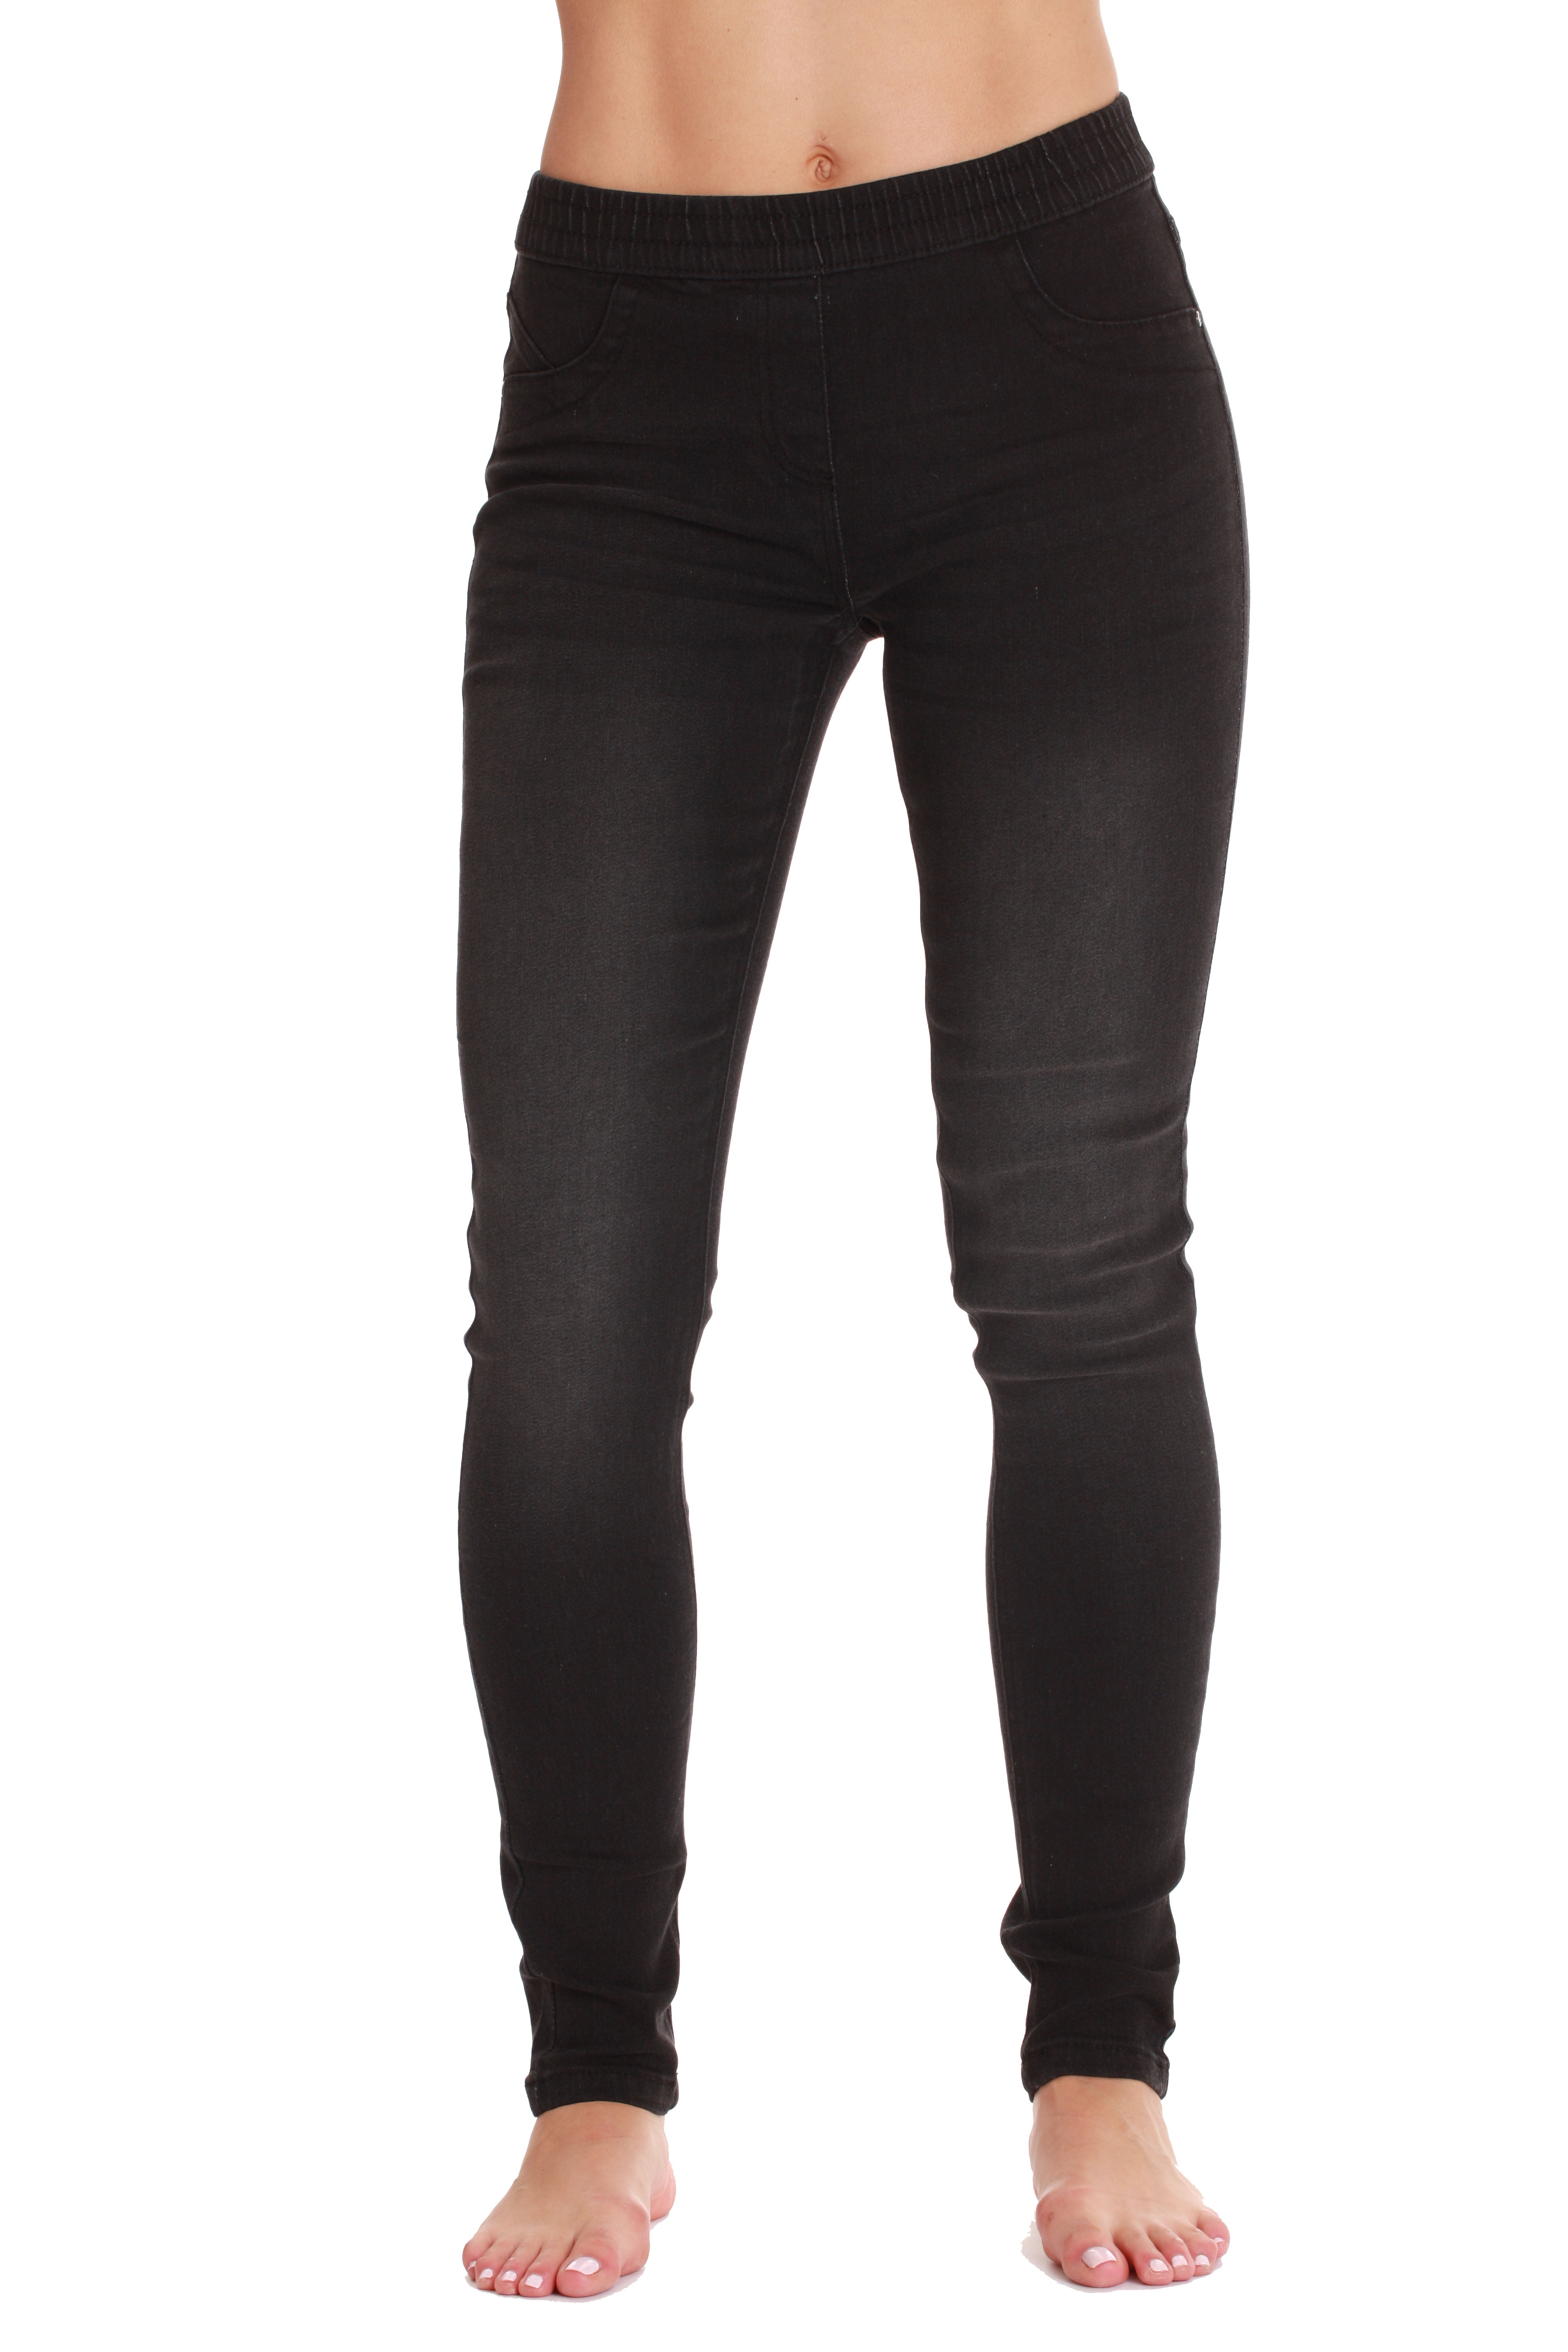 Just Love Women's Denim Jeggings with Pockets - Comfortable Stretch Jeans  Leggings (Black Denim, X-Large)